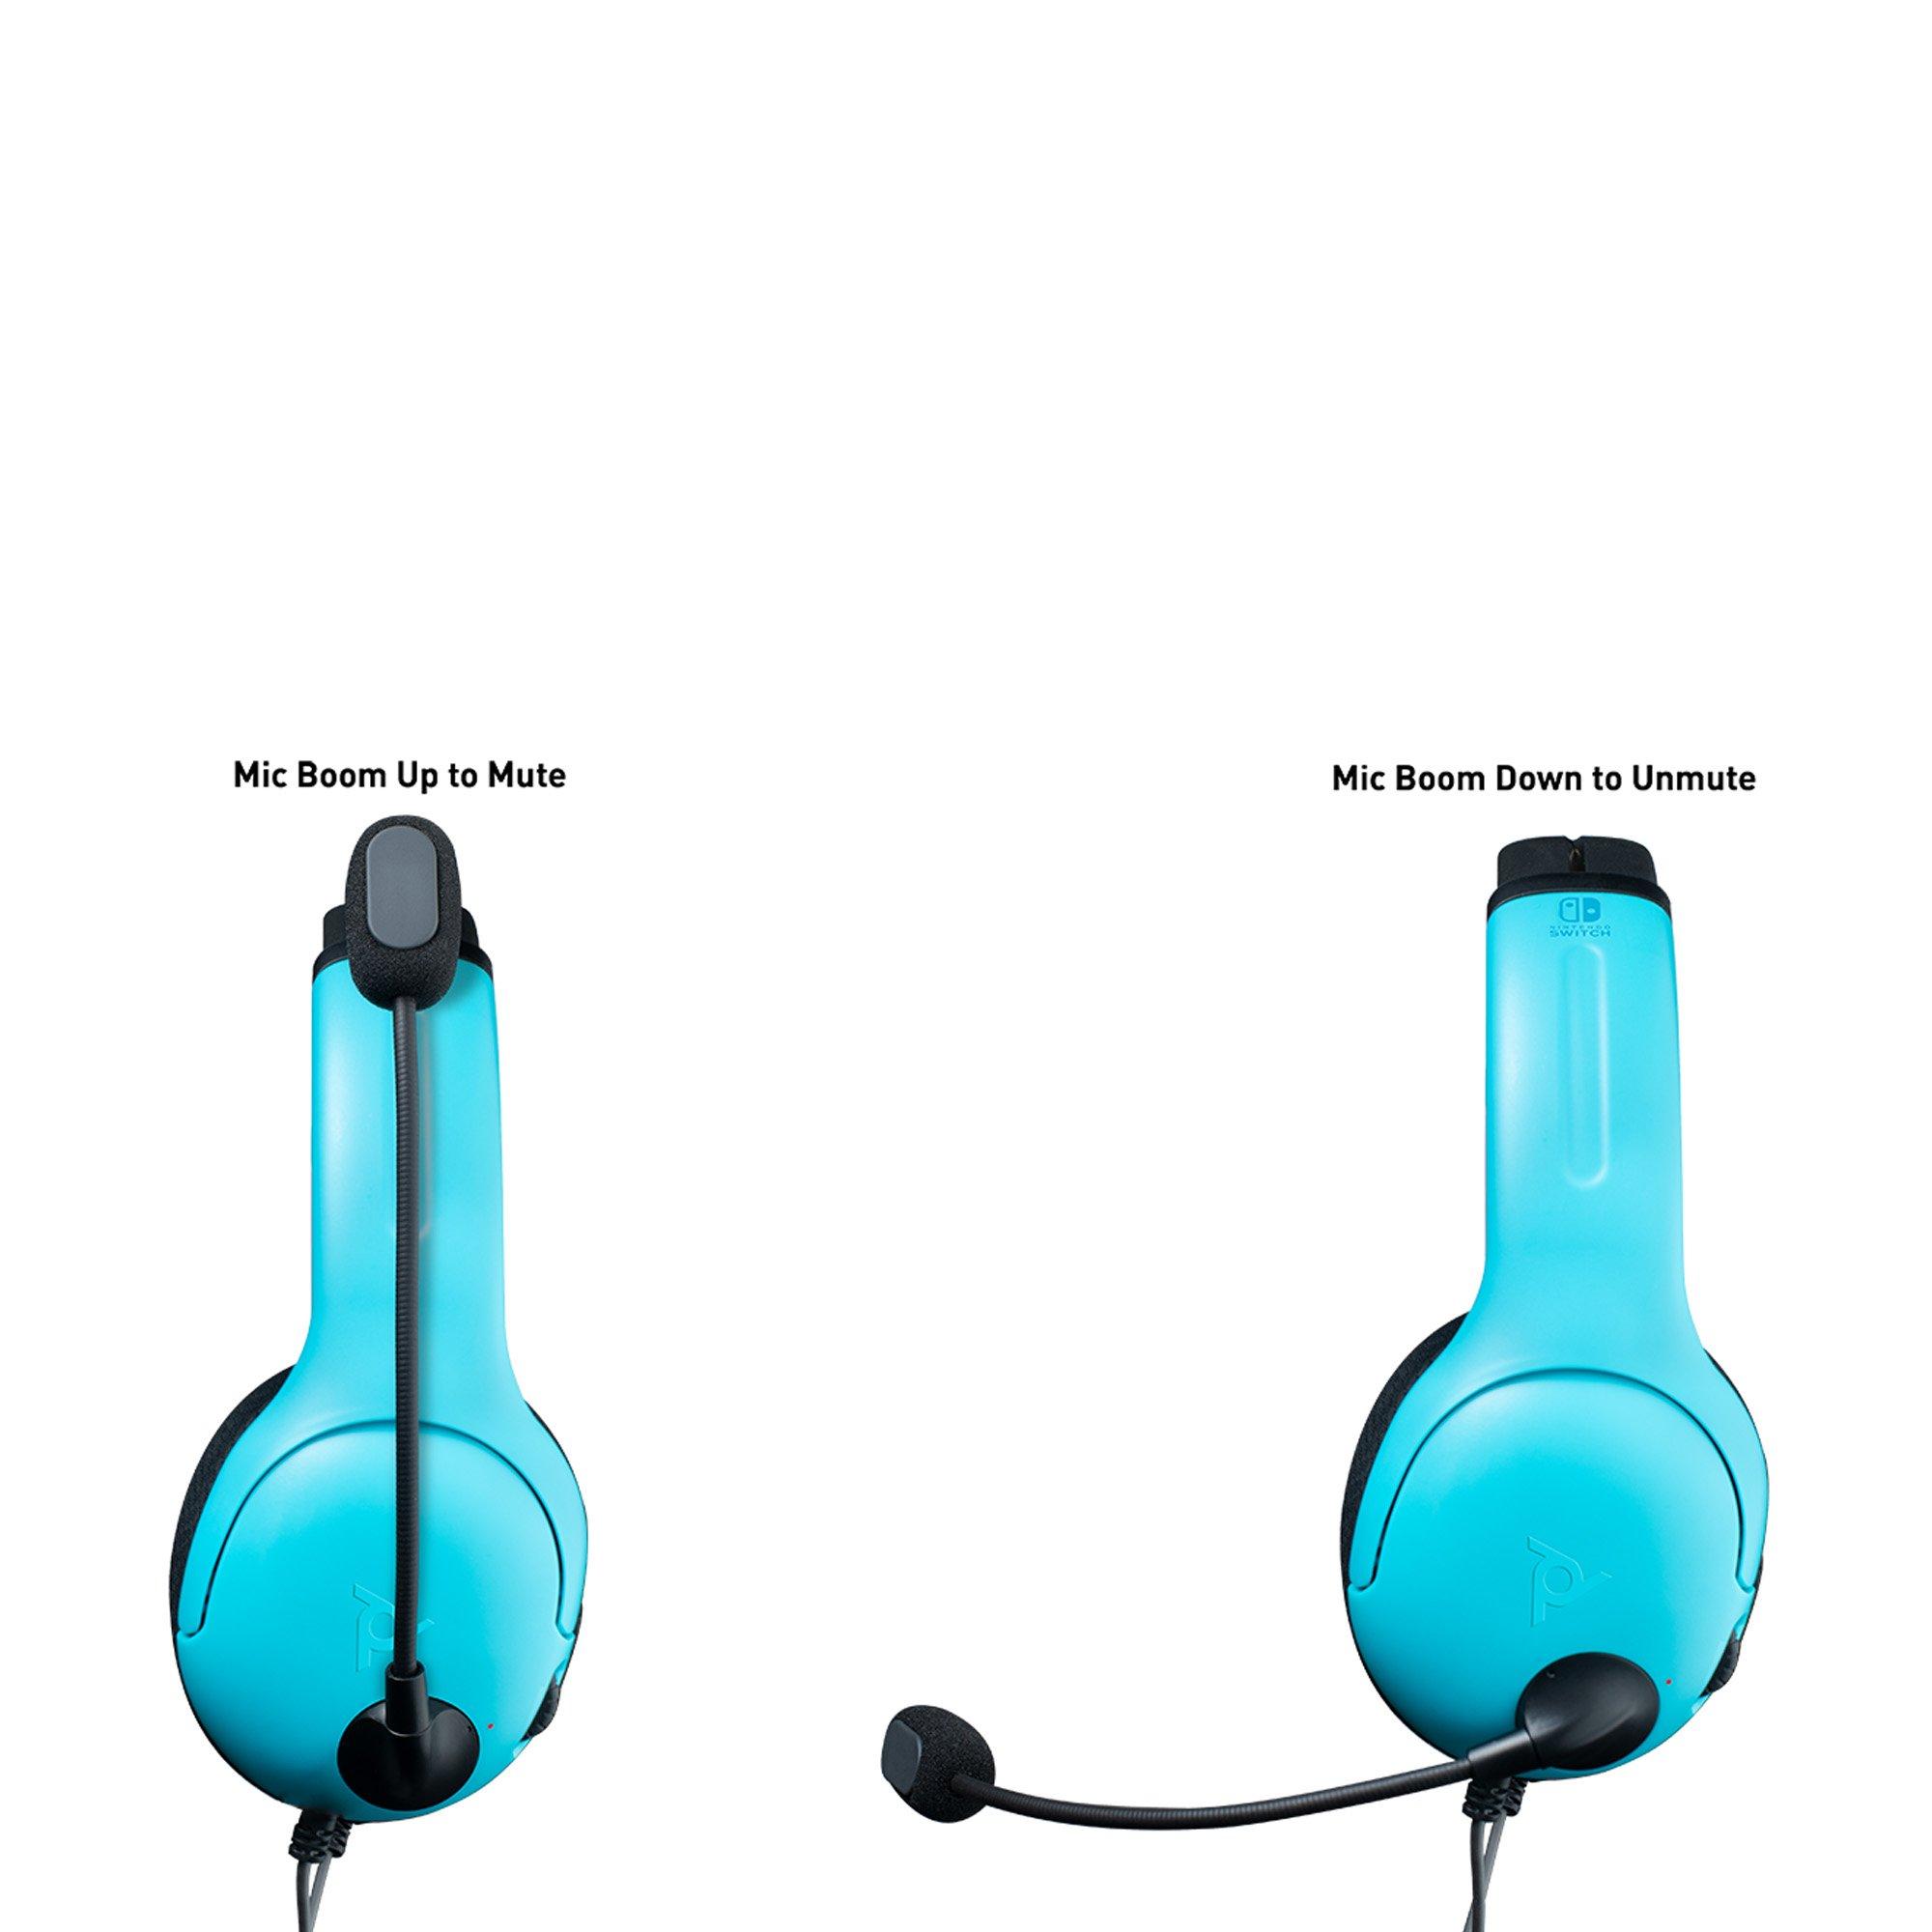 pdp LVL40 Wired Headset-Blue/Red Cuffia per videogiochi 